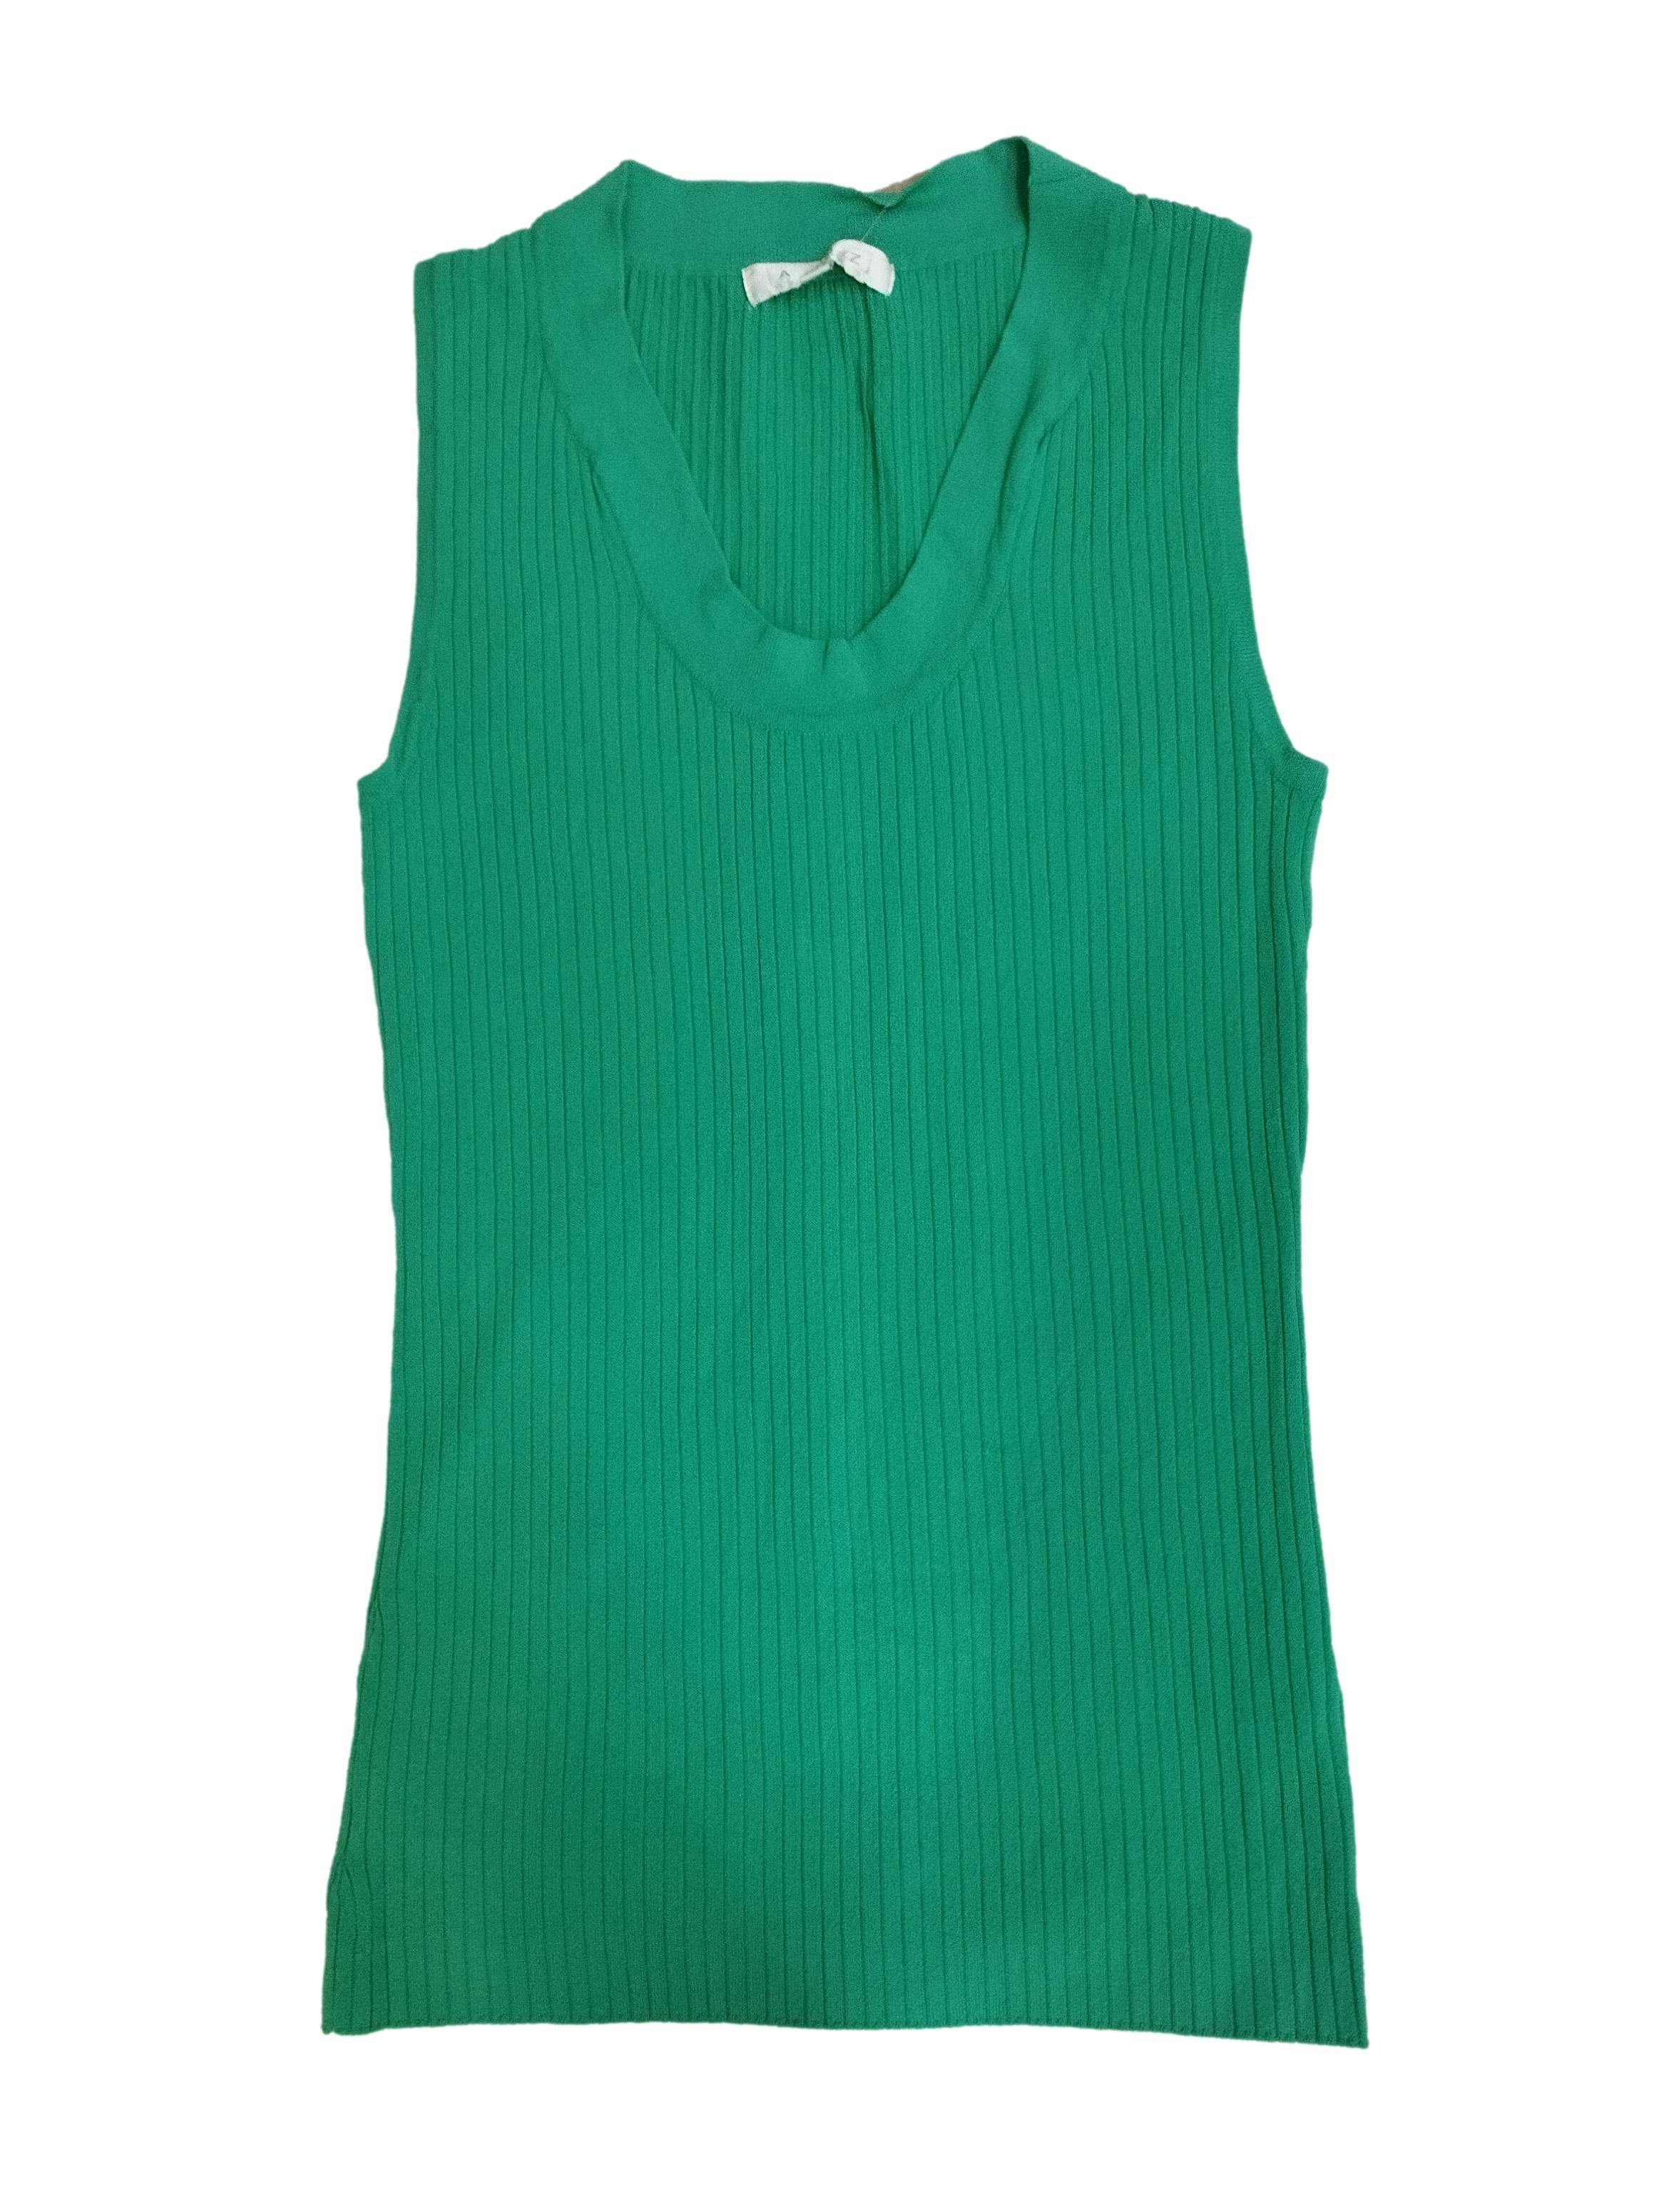 Blusa Aziz verde agua acanalada, manga cero, stretch. Busto: 70 cm (sin estirar), Largo: 64 cm